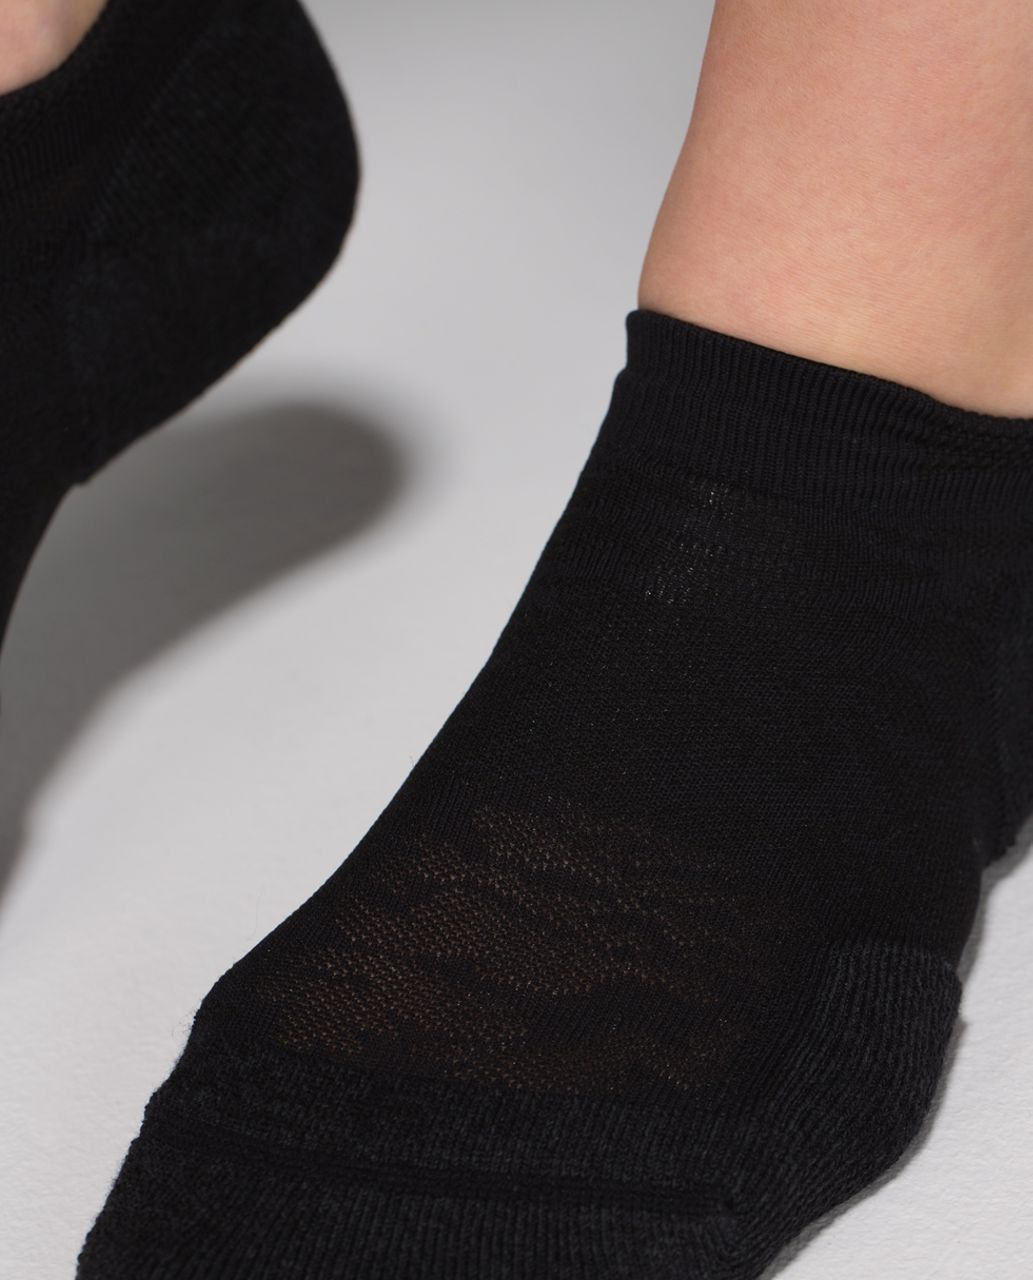 Lululemon Women's Ultimate Padded Run Sock - Chic Camo Black Deep Coal